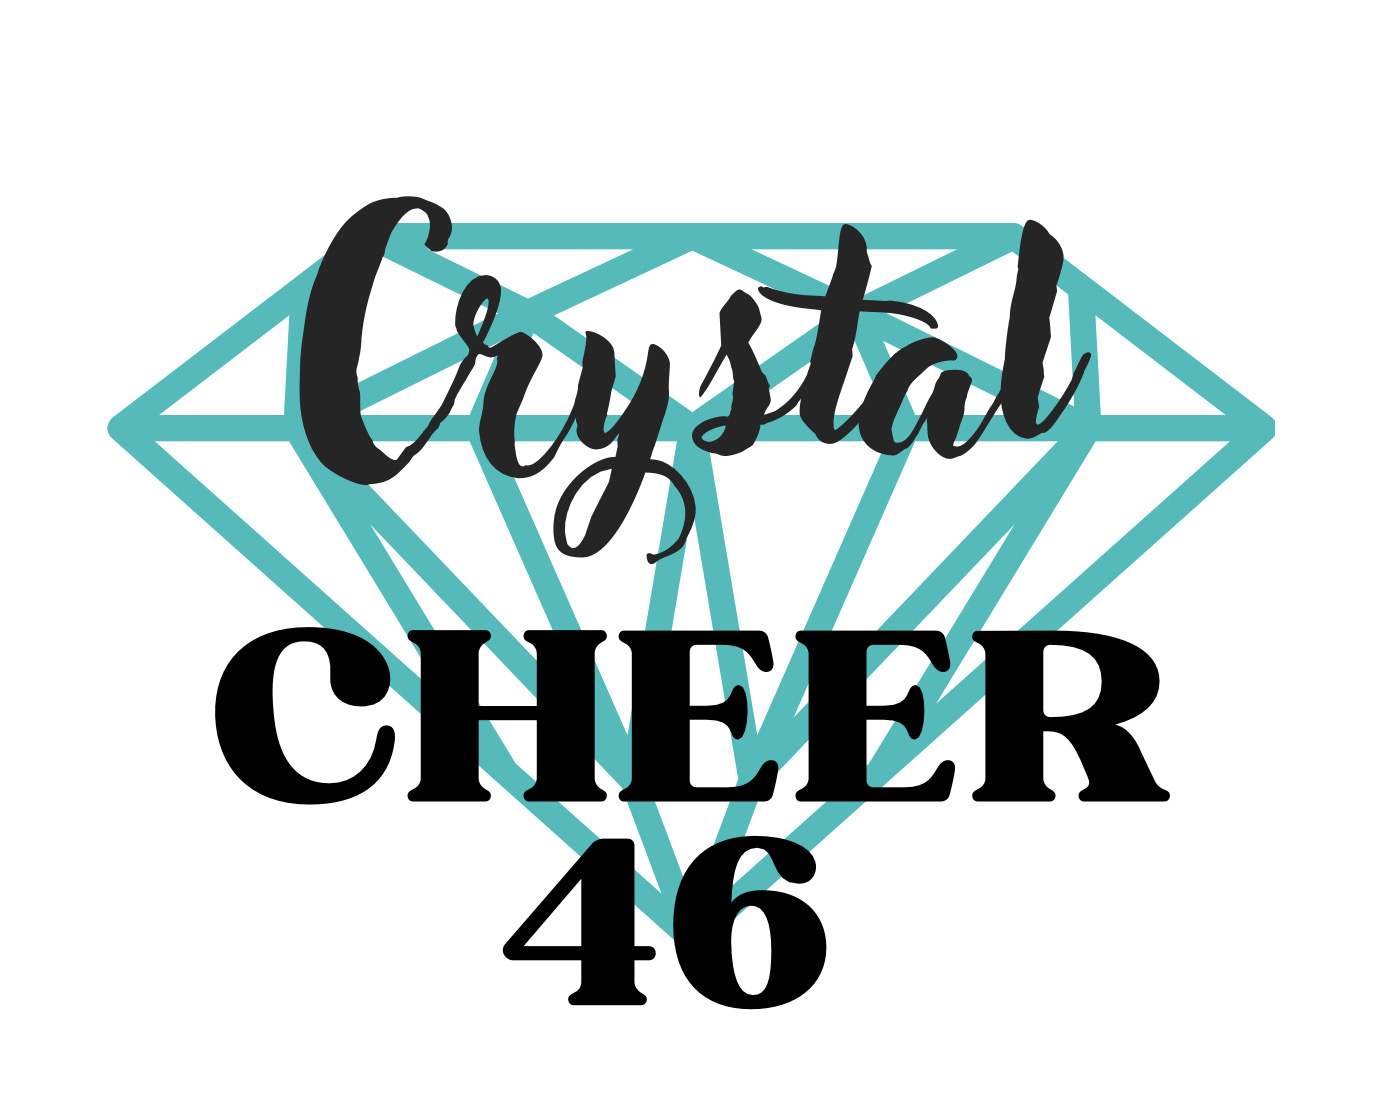 CrystalCheer46